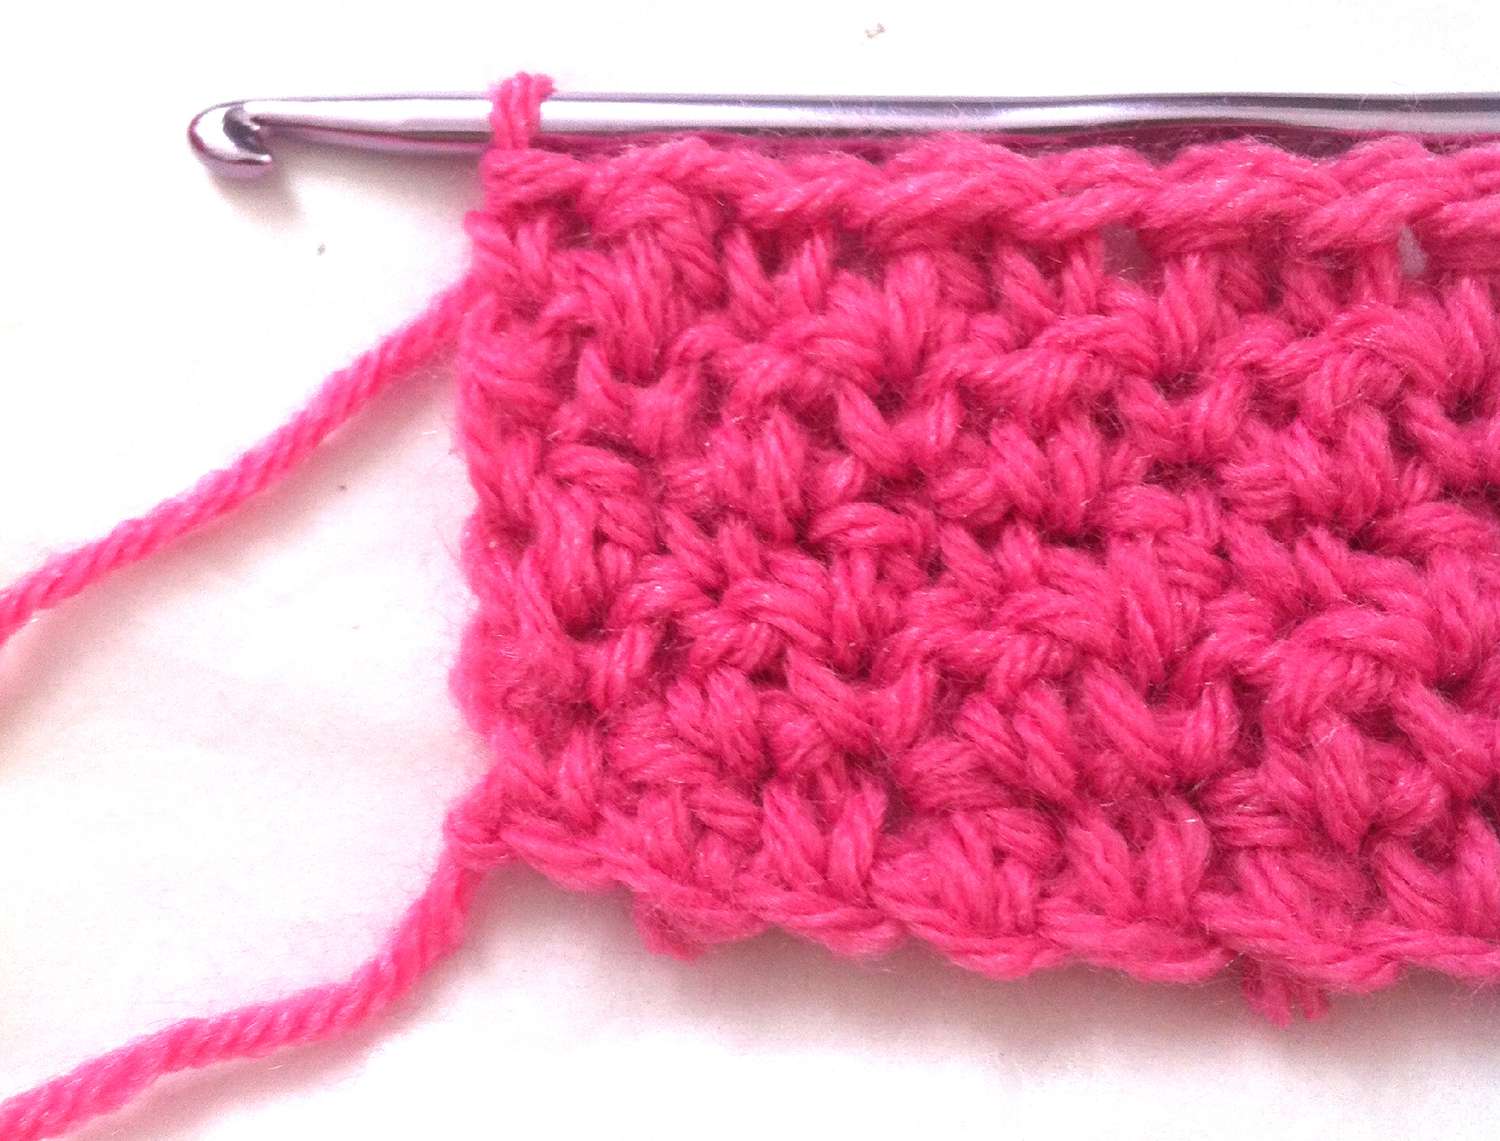 seed-stitch-crochet.jpg